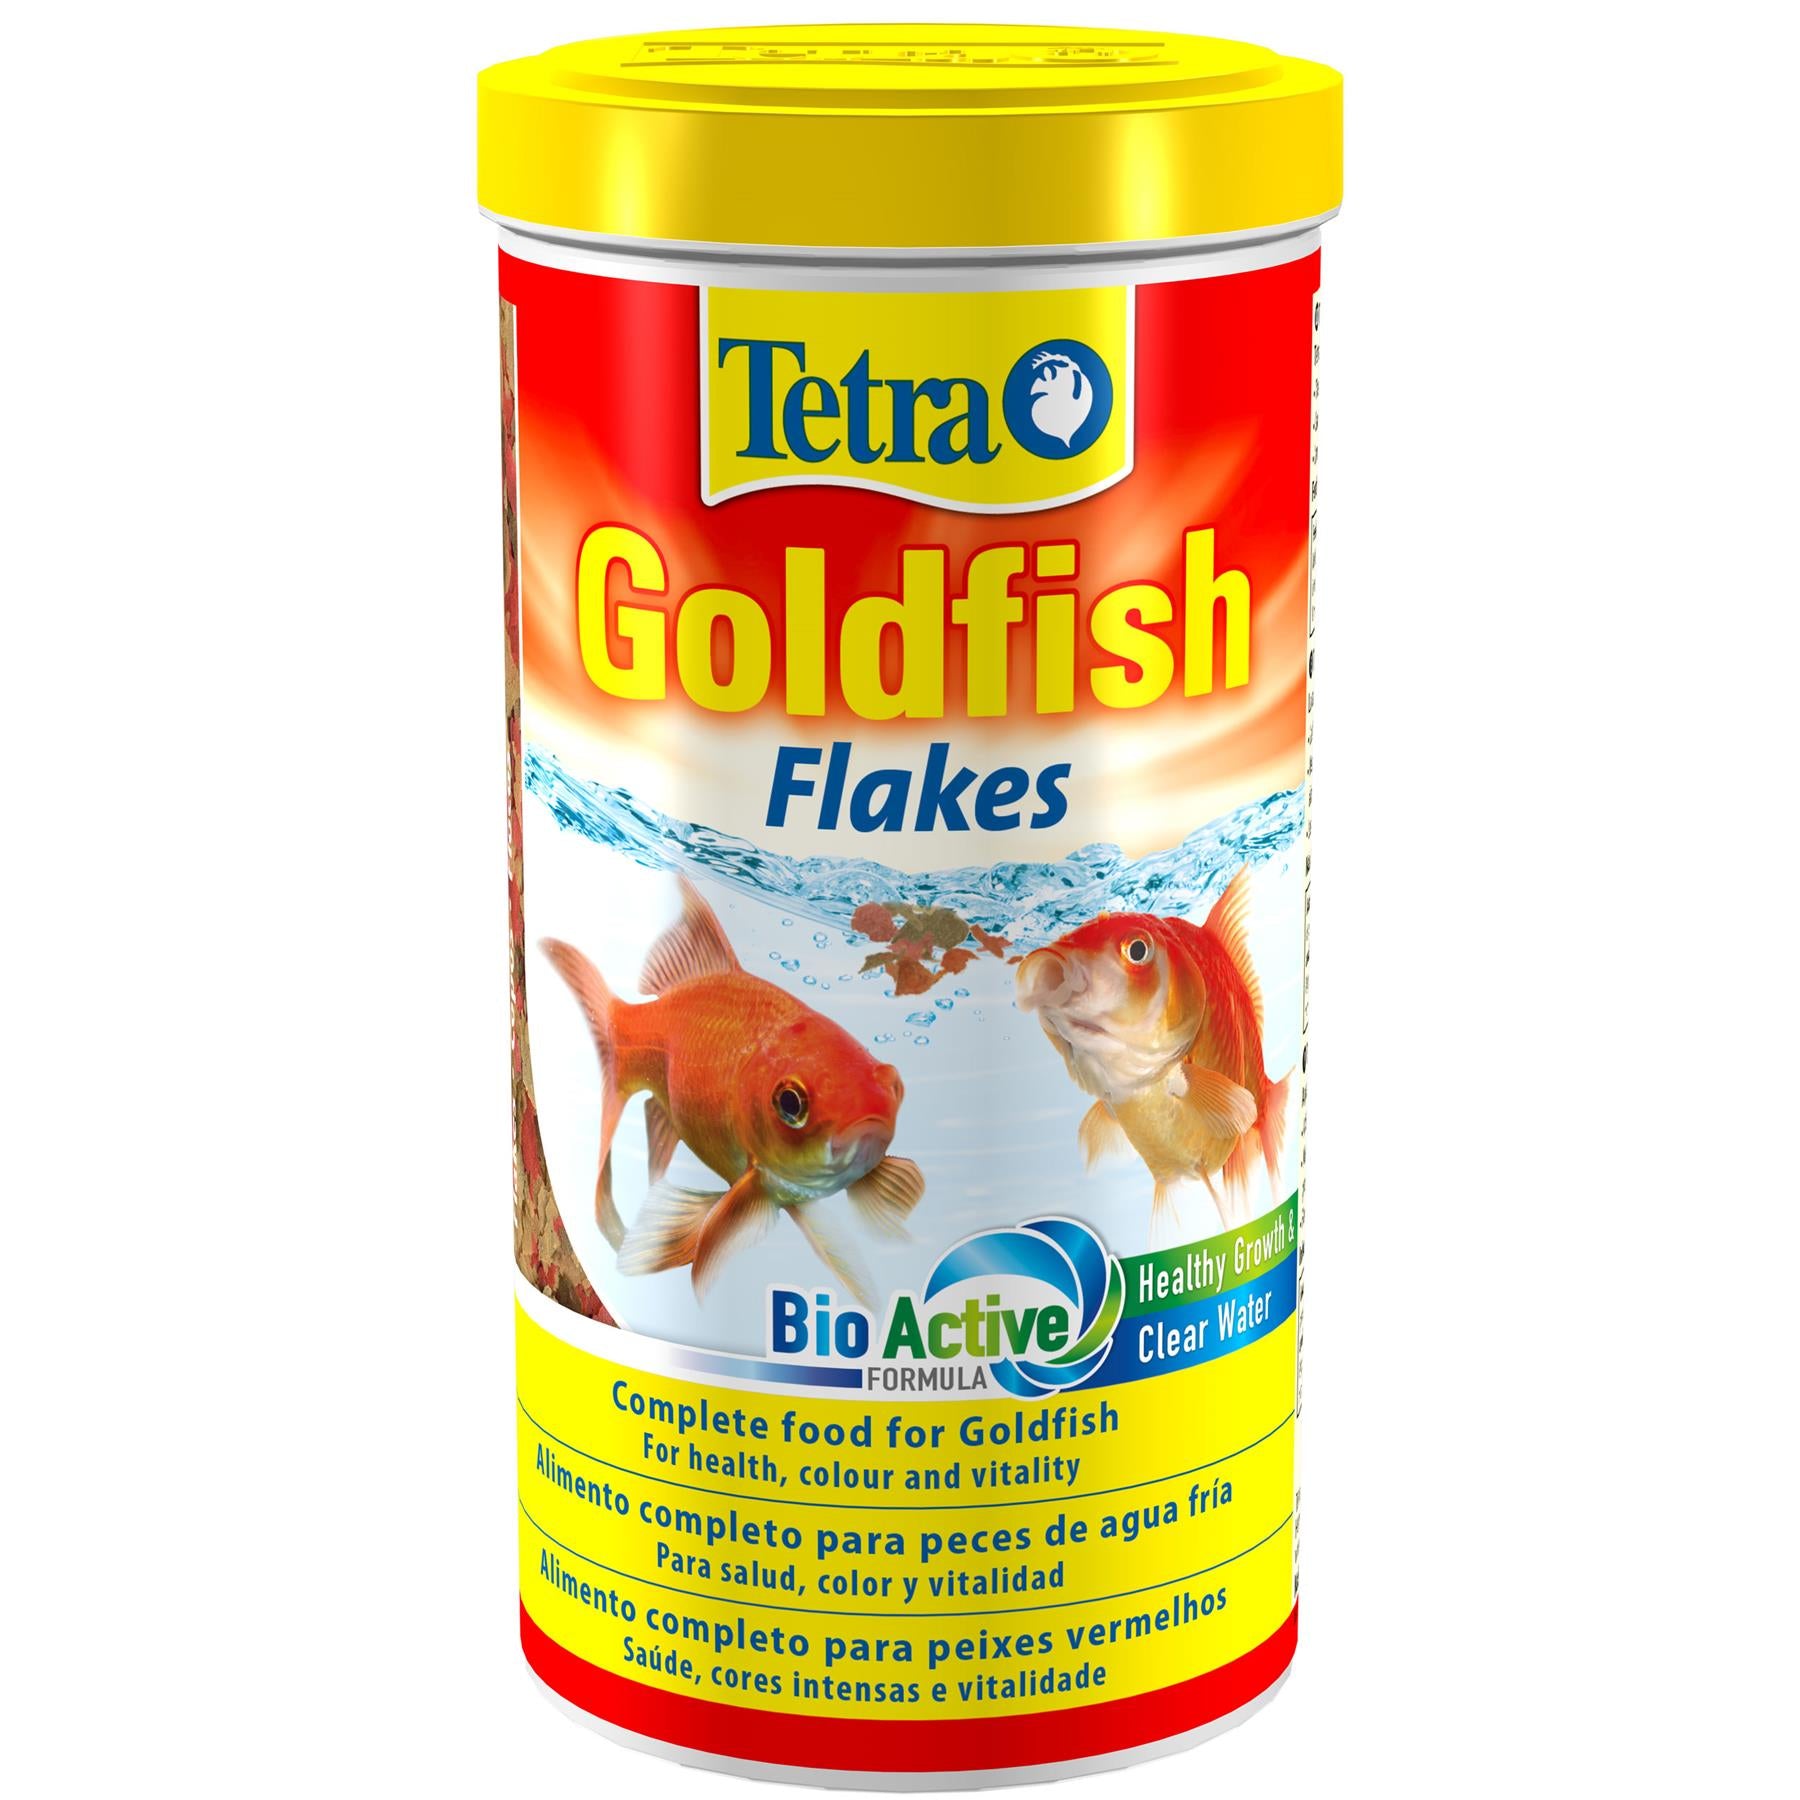 TETRA - TetraMin - 100ml - Flake food for fish